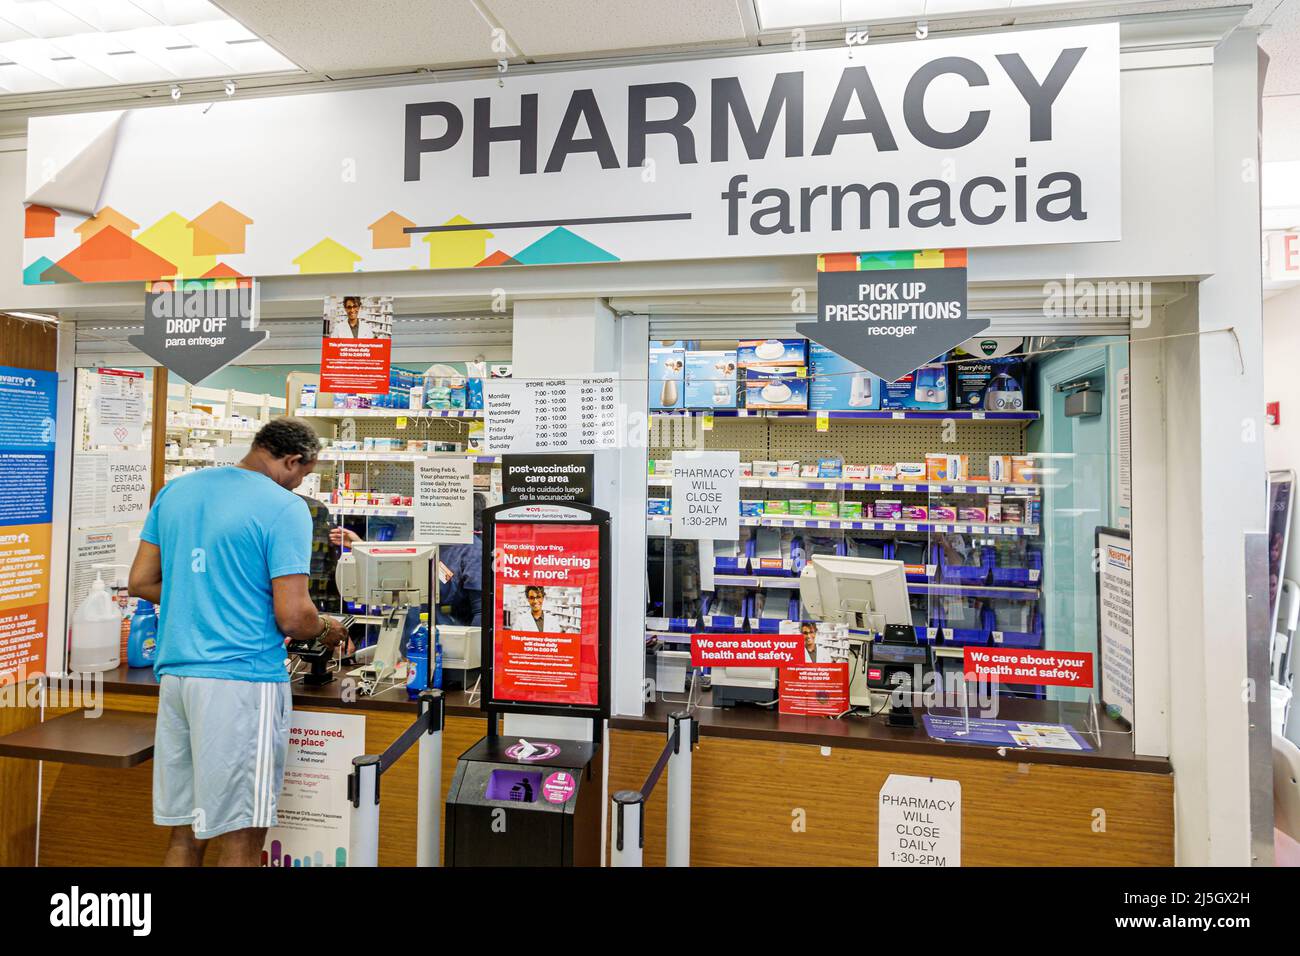 Miami Beach Florida Navarro Pharmacy Farmacia dentro del mostrador interior Español Inglés idiomas bilingües Negro hombre hombre cliente masculino Foto de stock